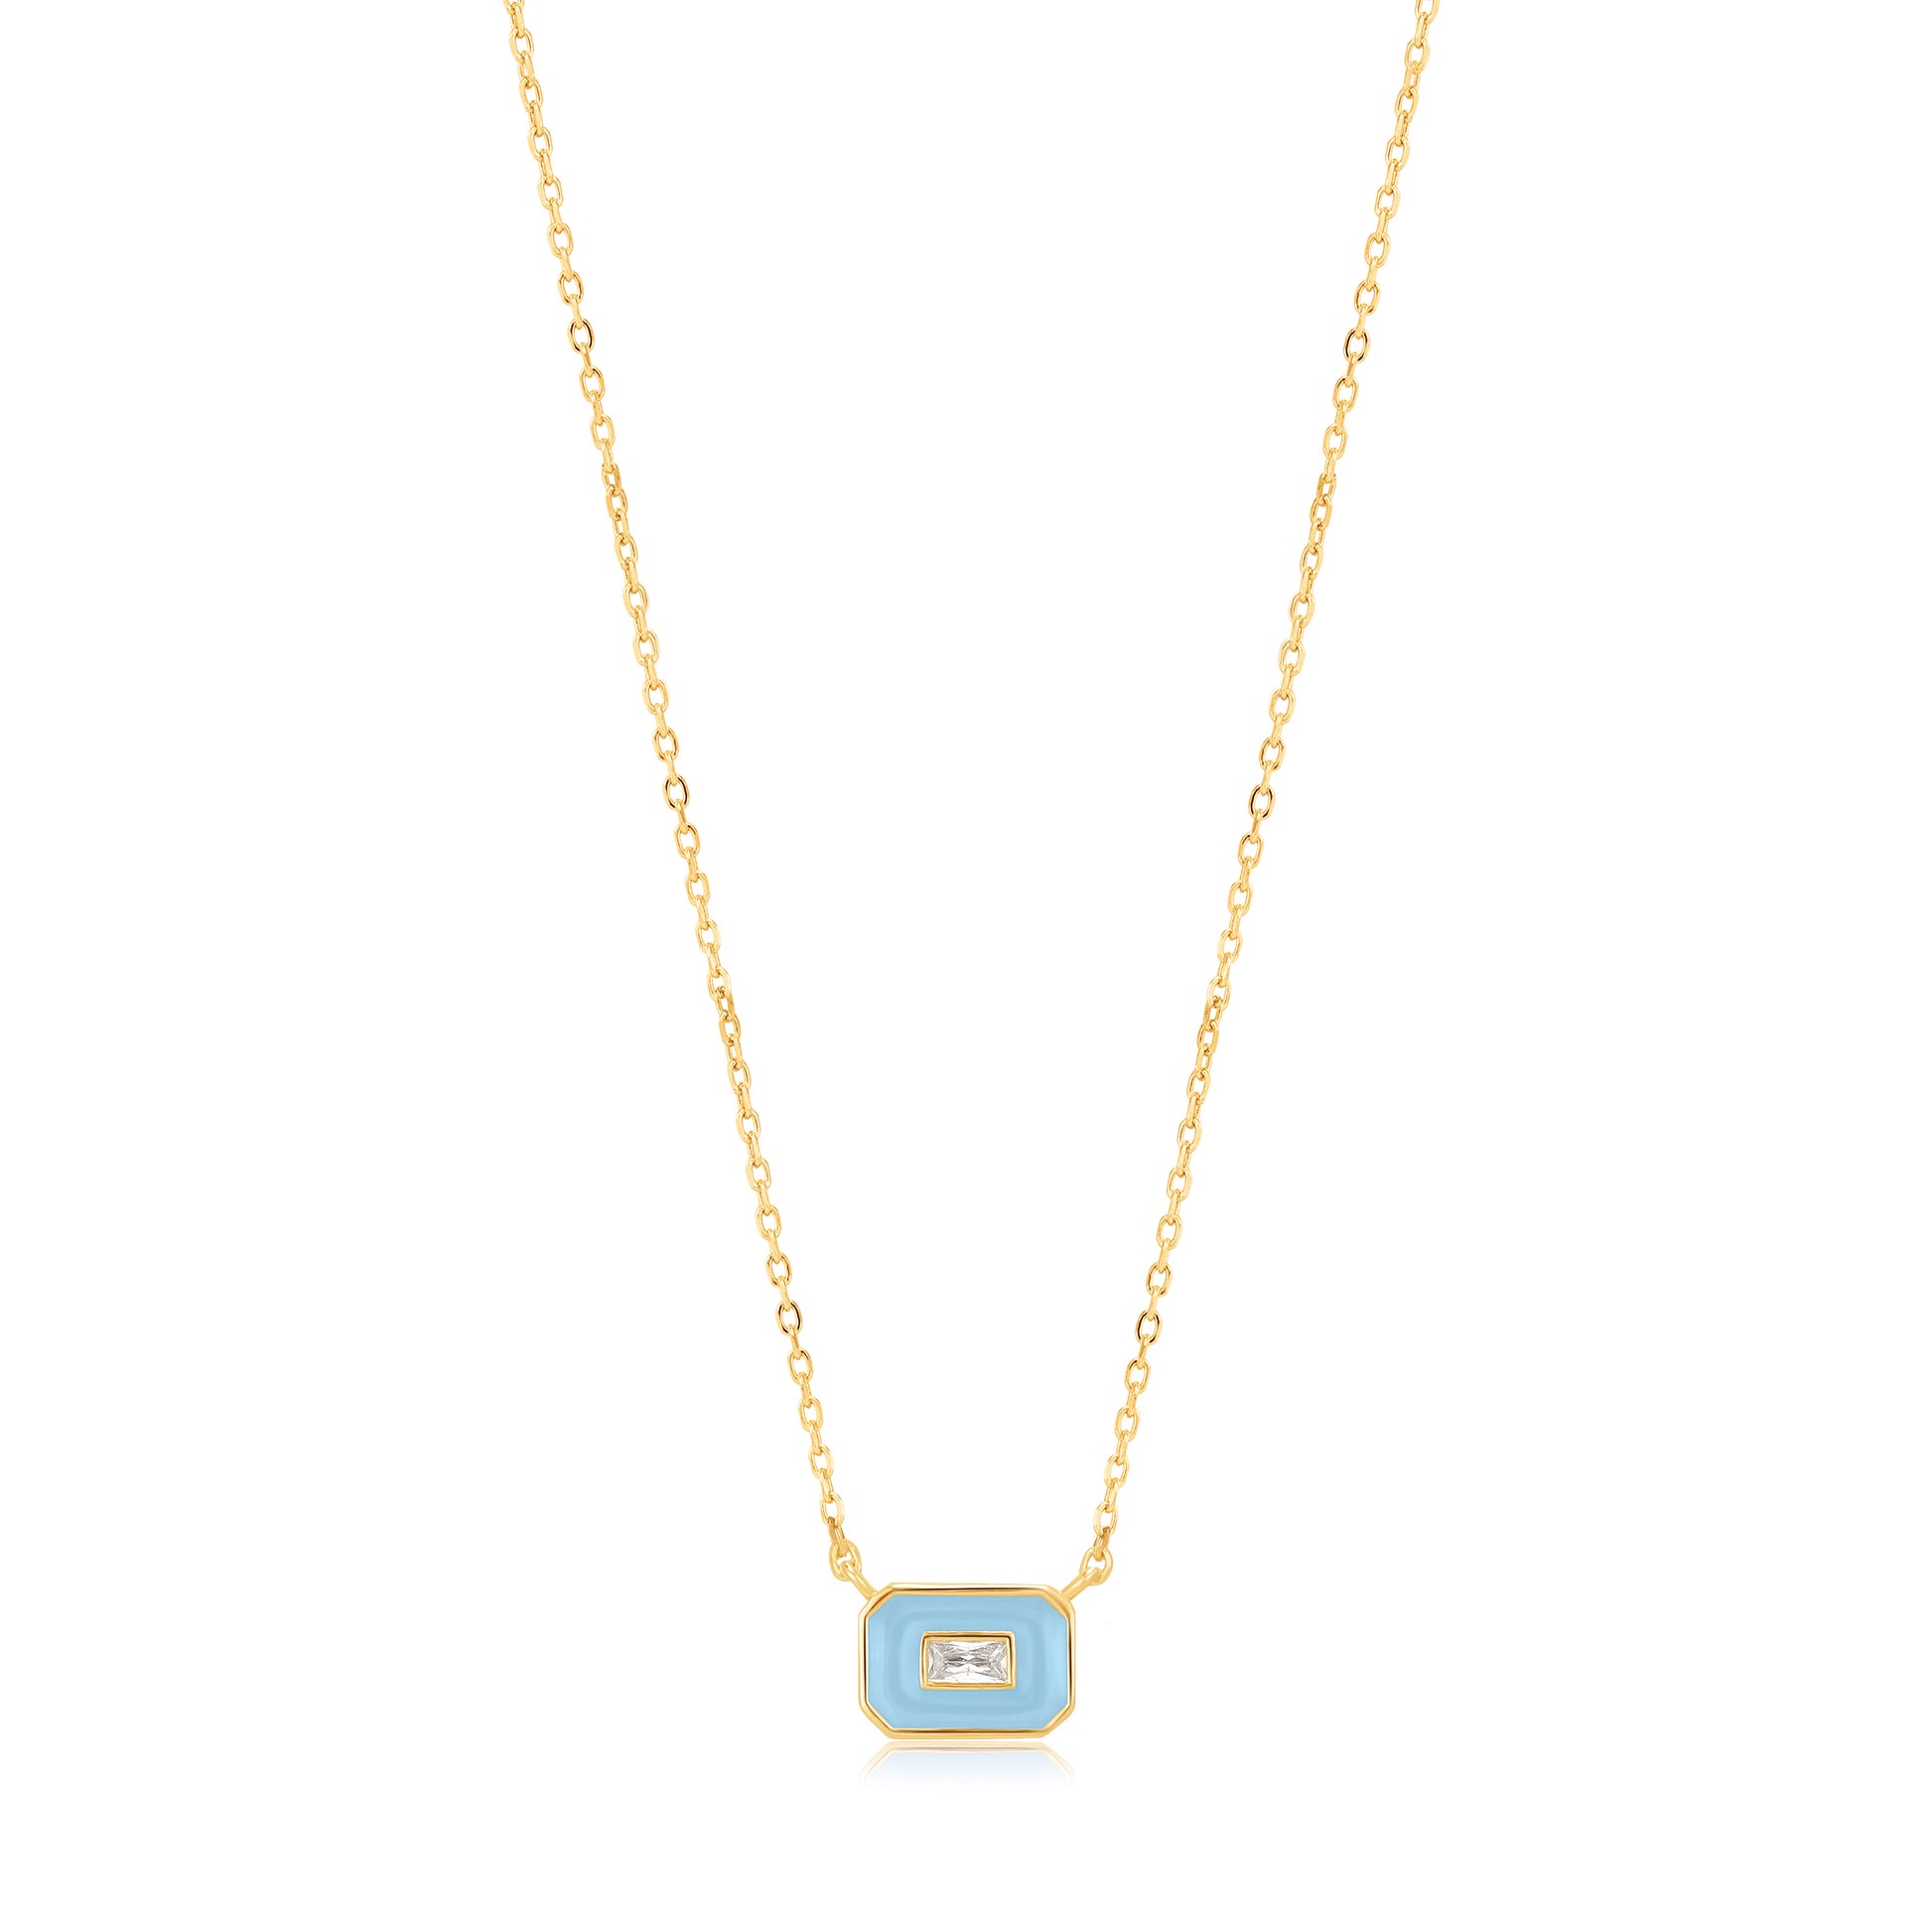 Ania Haie Powder Blue Enamel Emblem Gold Necklace - Silver Necklace